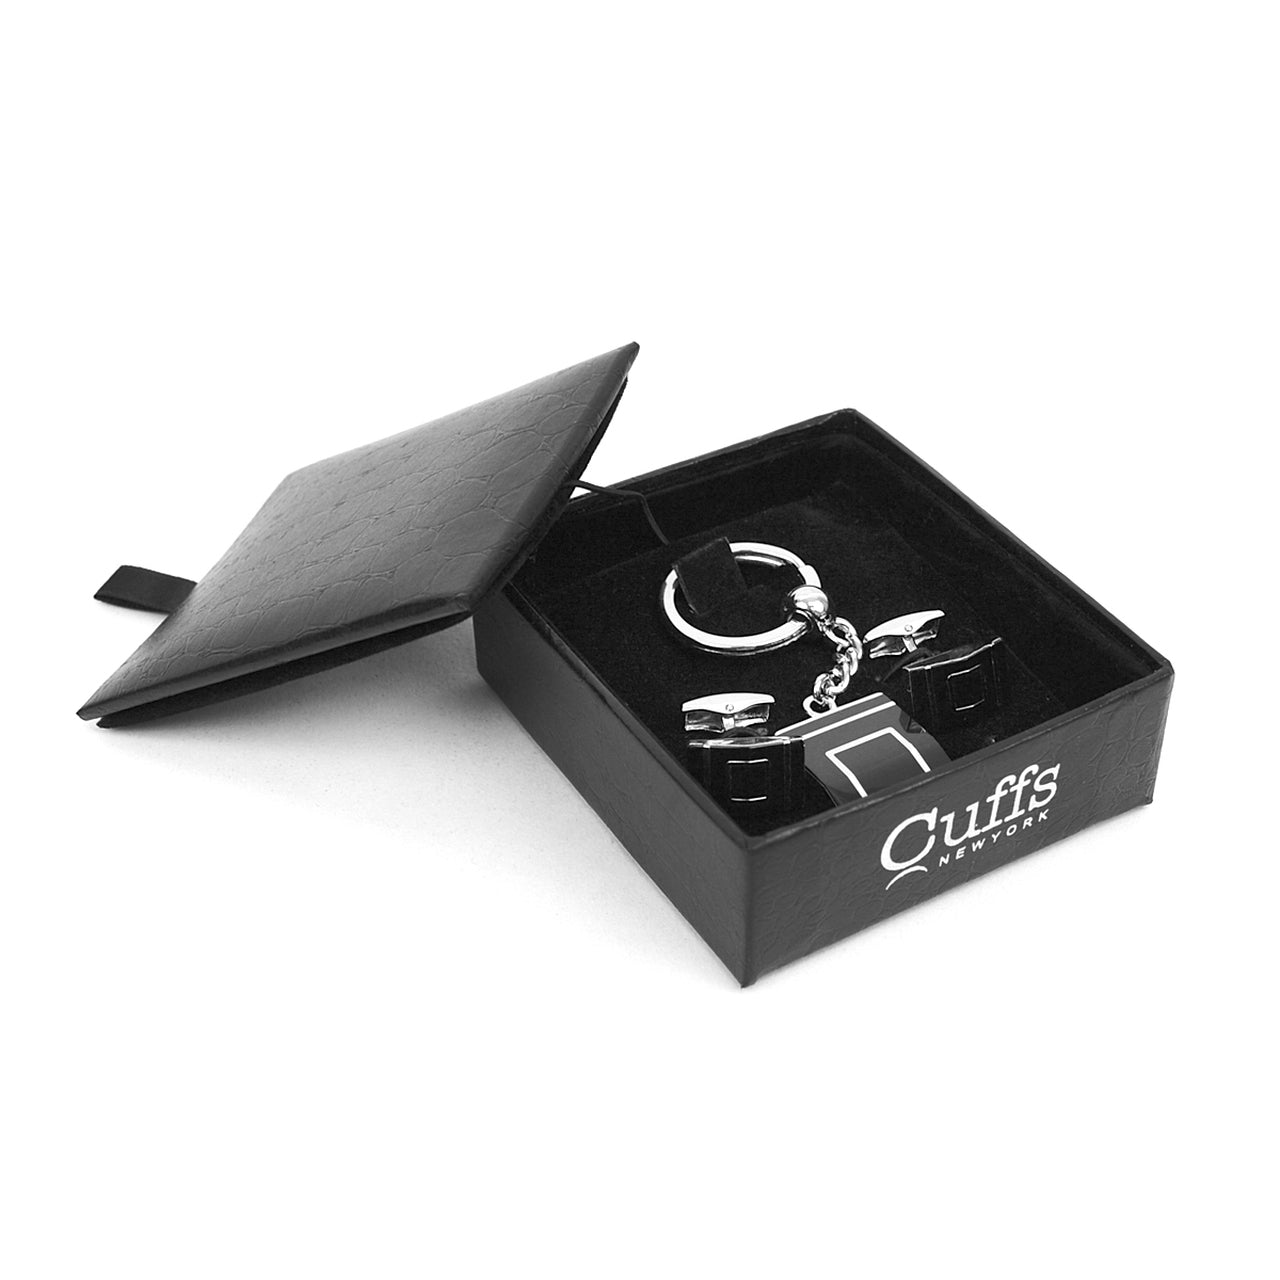 Men's Silver & Black Cufflink and Keychain Set - iBESTEST.com